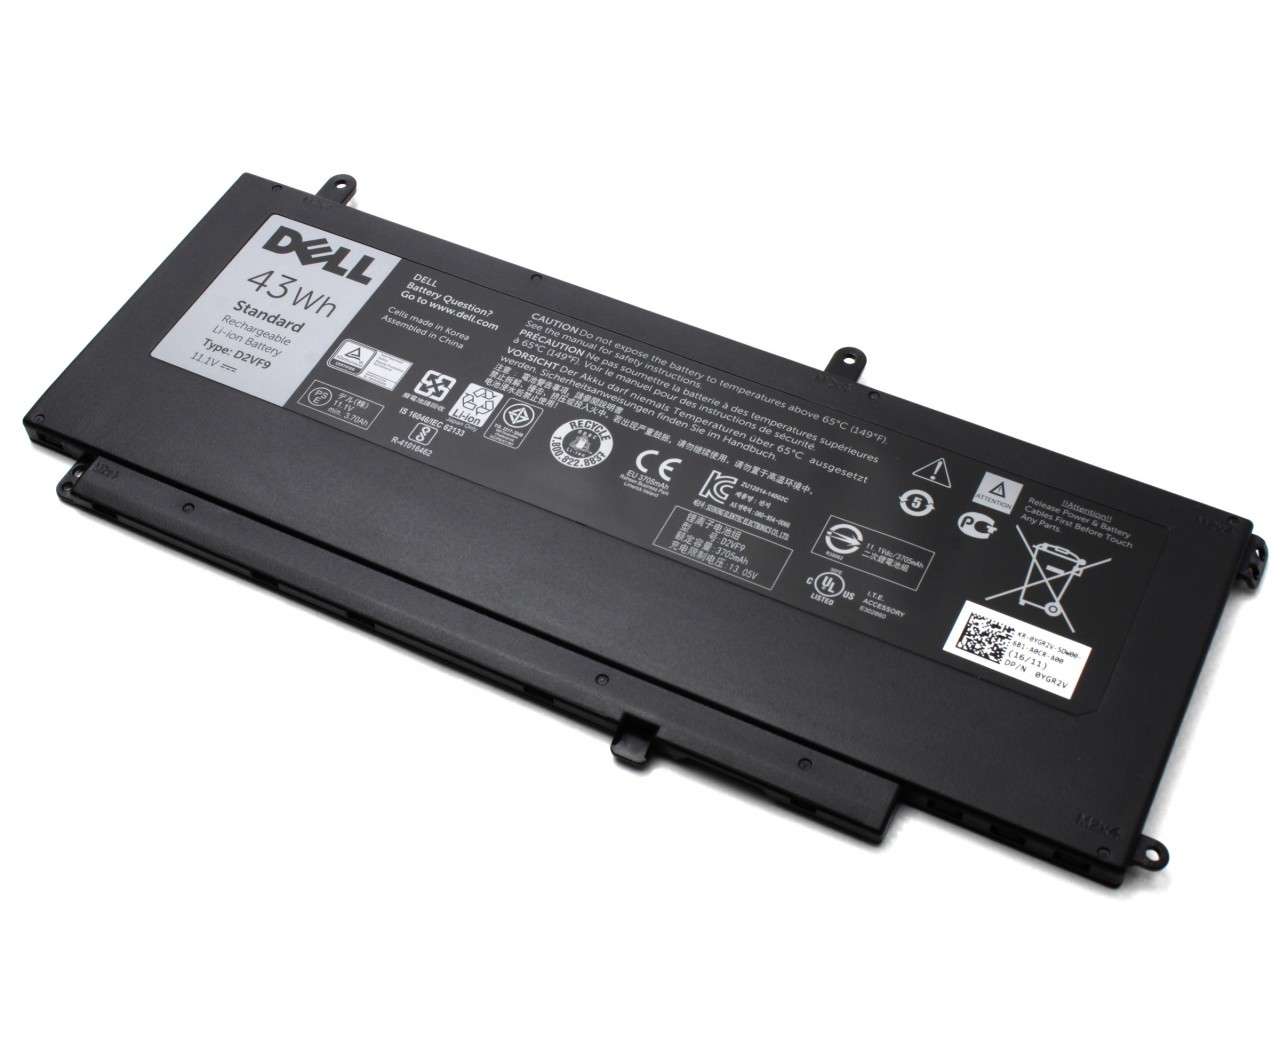 Baterie Dell Inspiron 15 7547 Originala 43Wh imagine powerlaptop.ro 2021